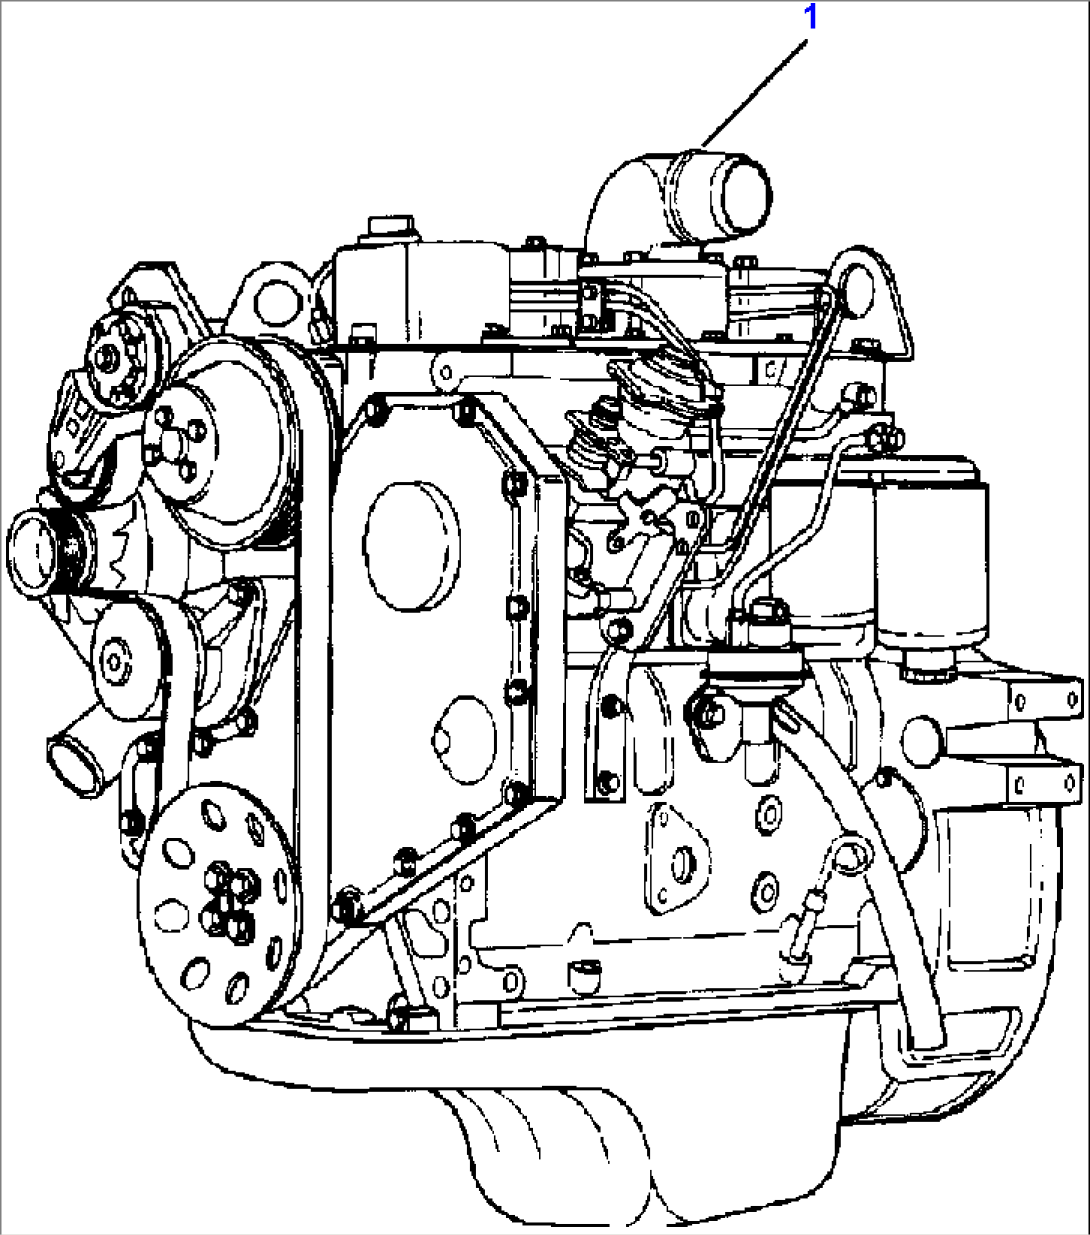 A9101-A1A7 ENGINE ASSEMBLY